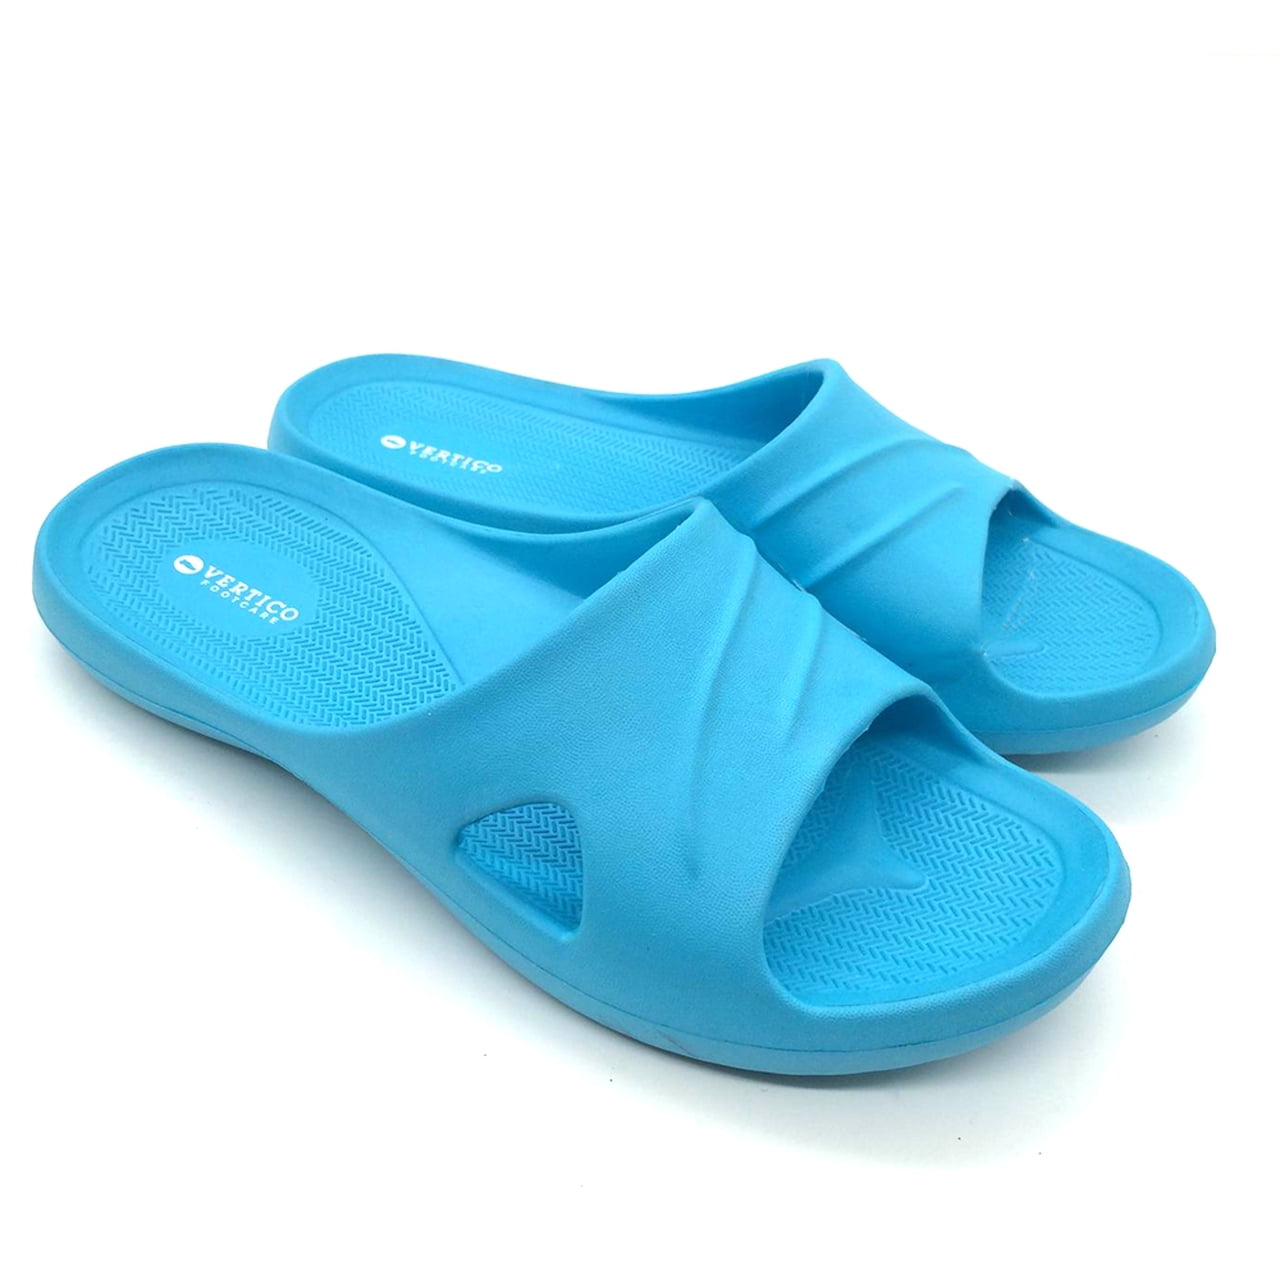 Vertico Slide-on Women's Shower Sandals 